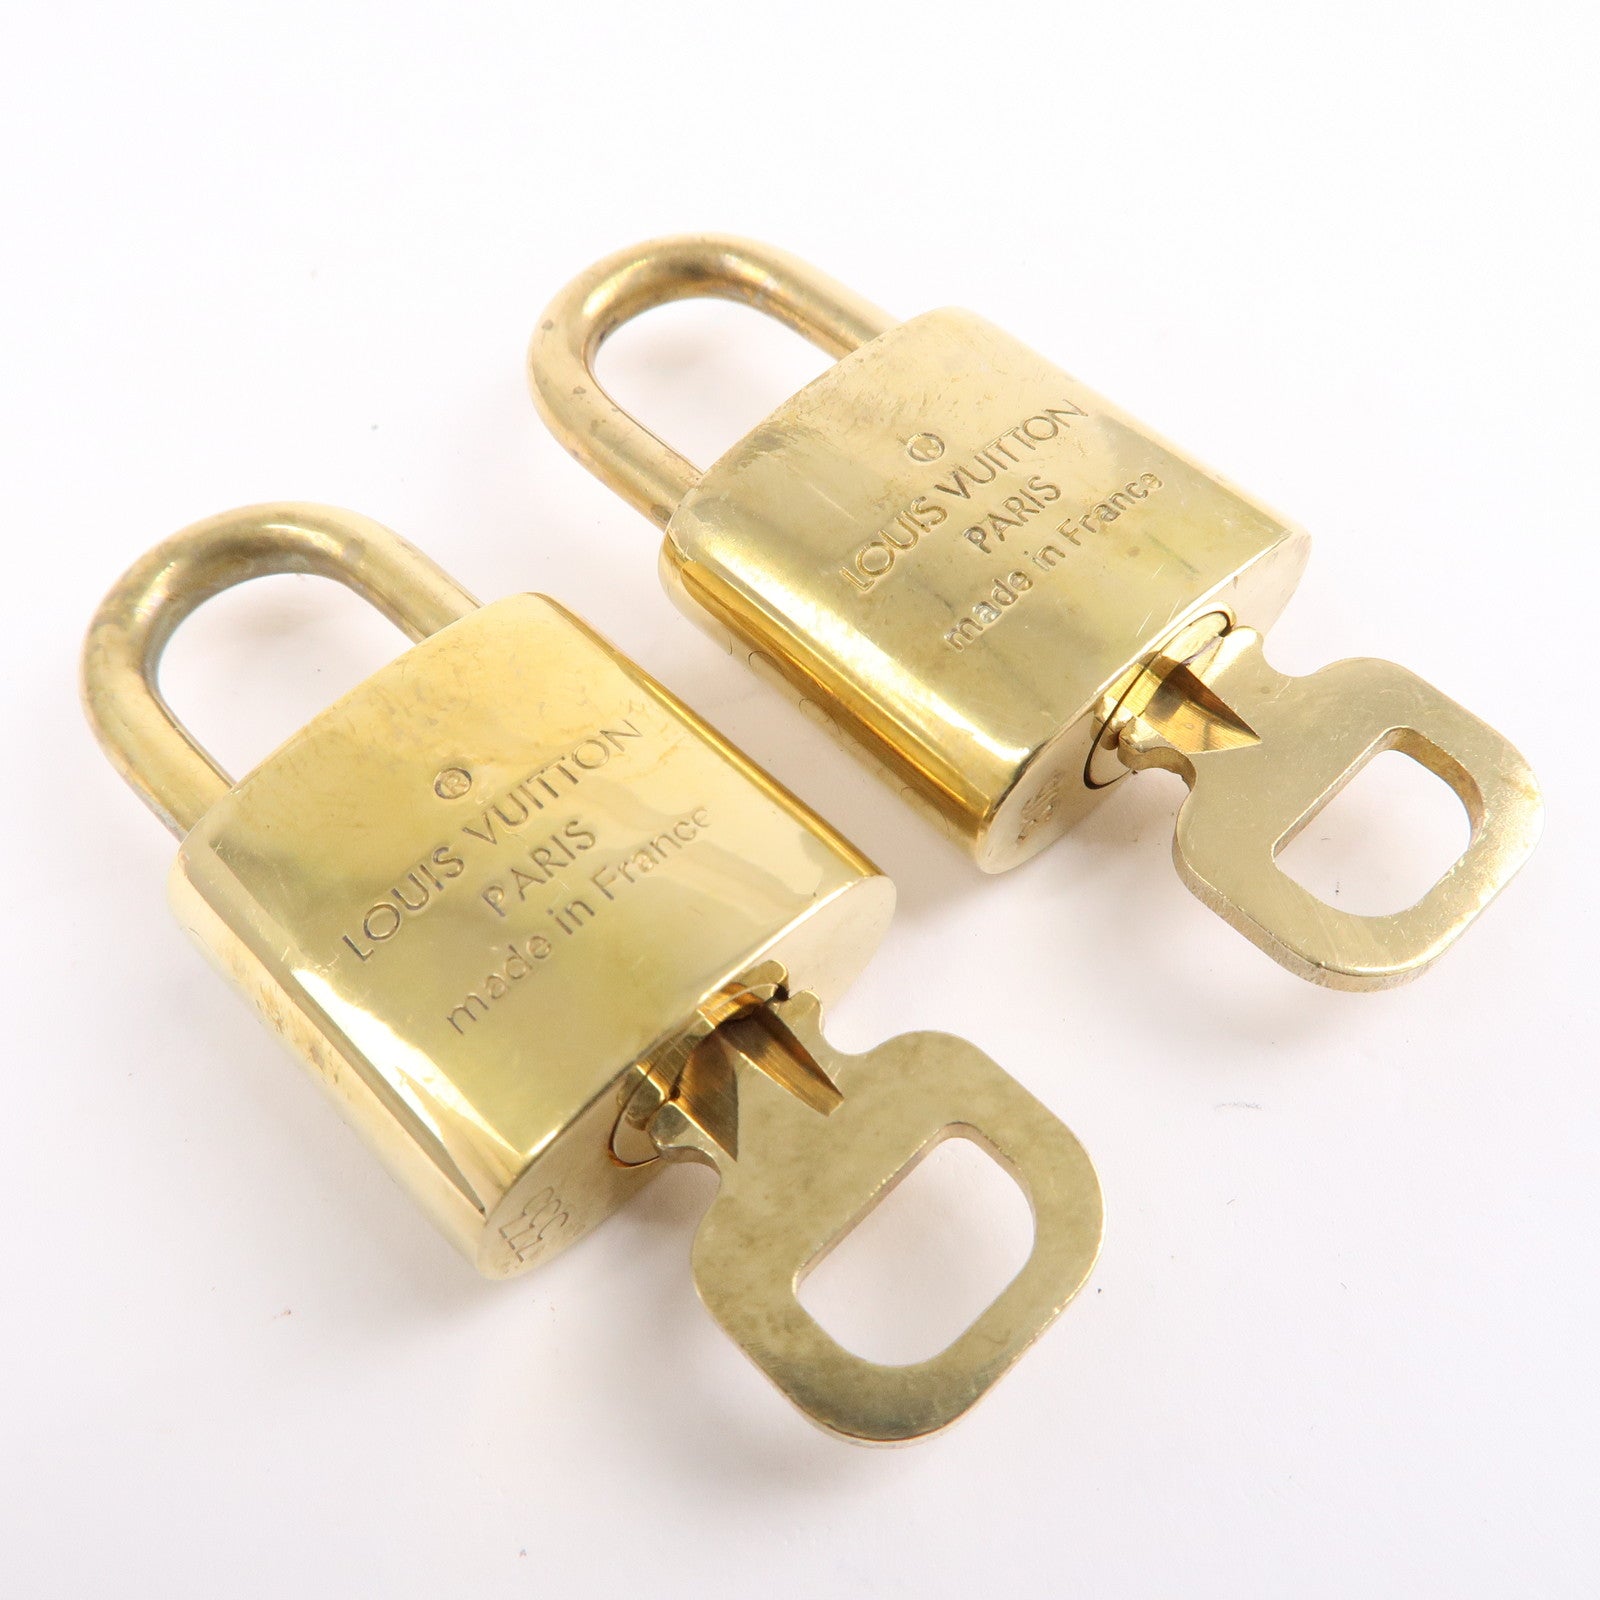 Louis Vuitton Padlock and One Key 225 Lock Brass -  Hong Kong